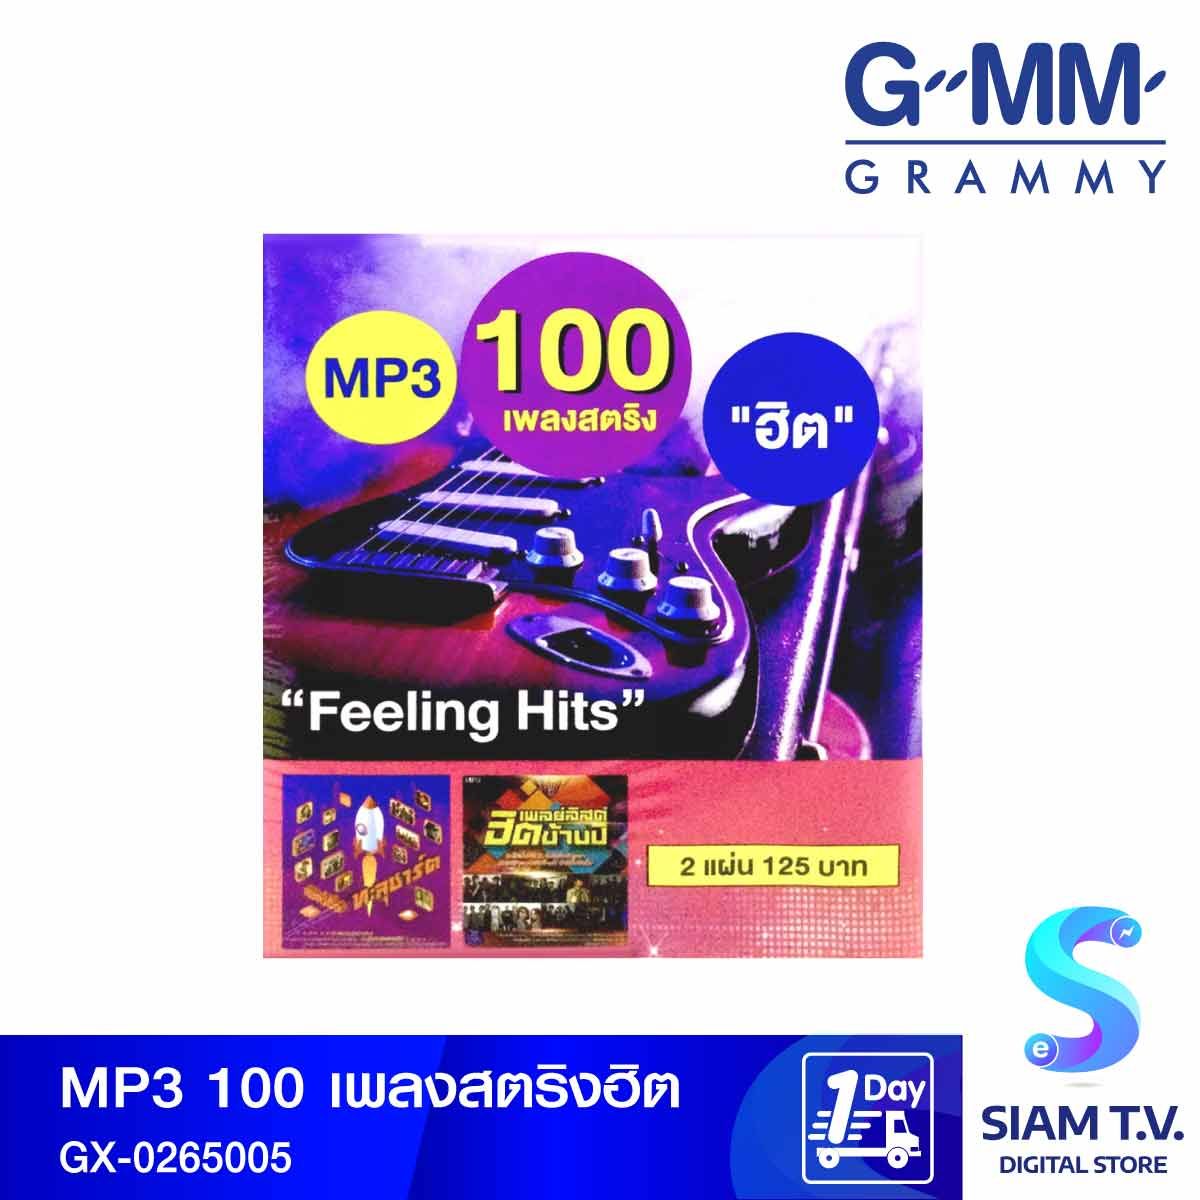 GMM GRAMMY MP3 เพลงสตริงฮิตPromotion GX-0265005